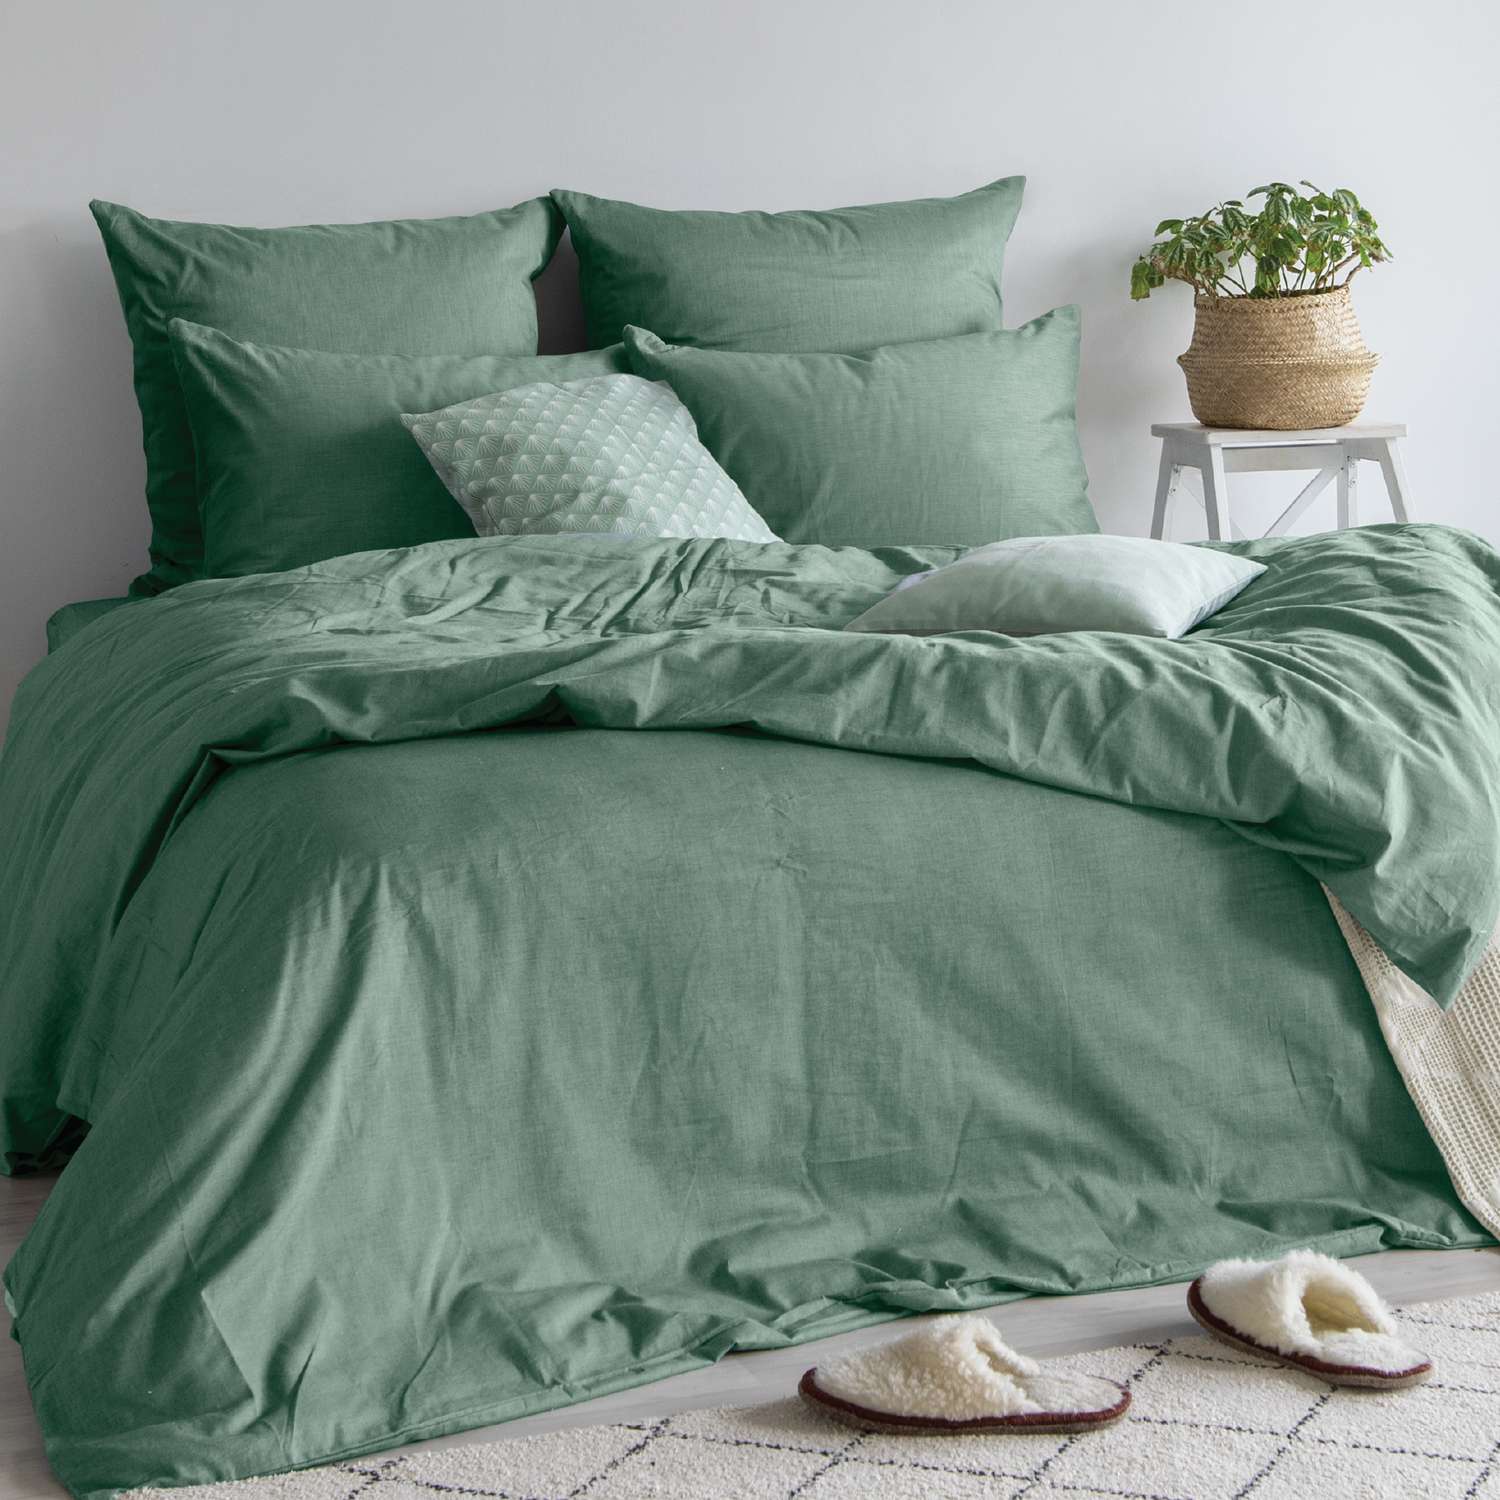 Комплект постельного белья Absolut 1.5СП Emerald наволочки 70х70см меланж - фото 2